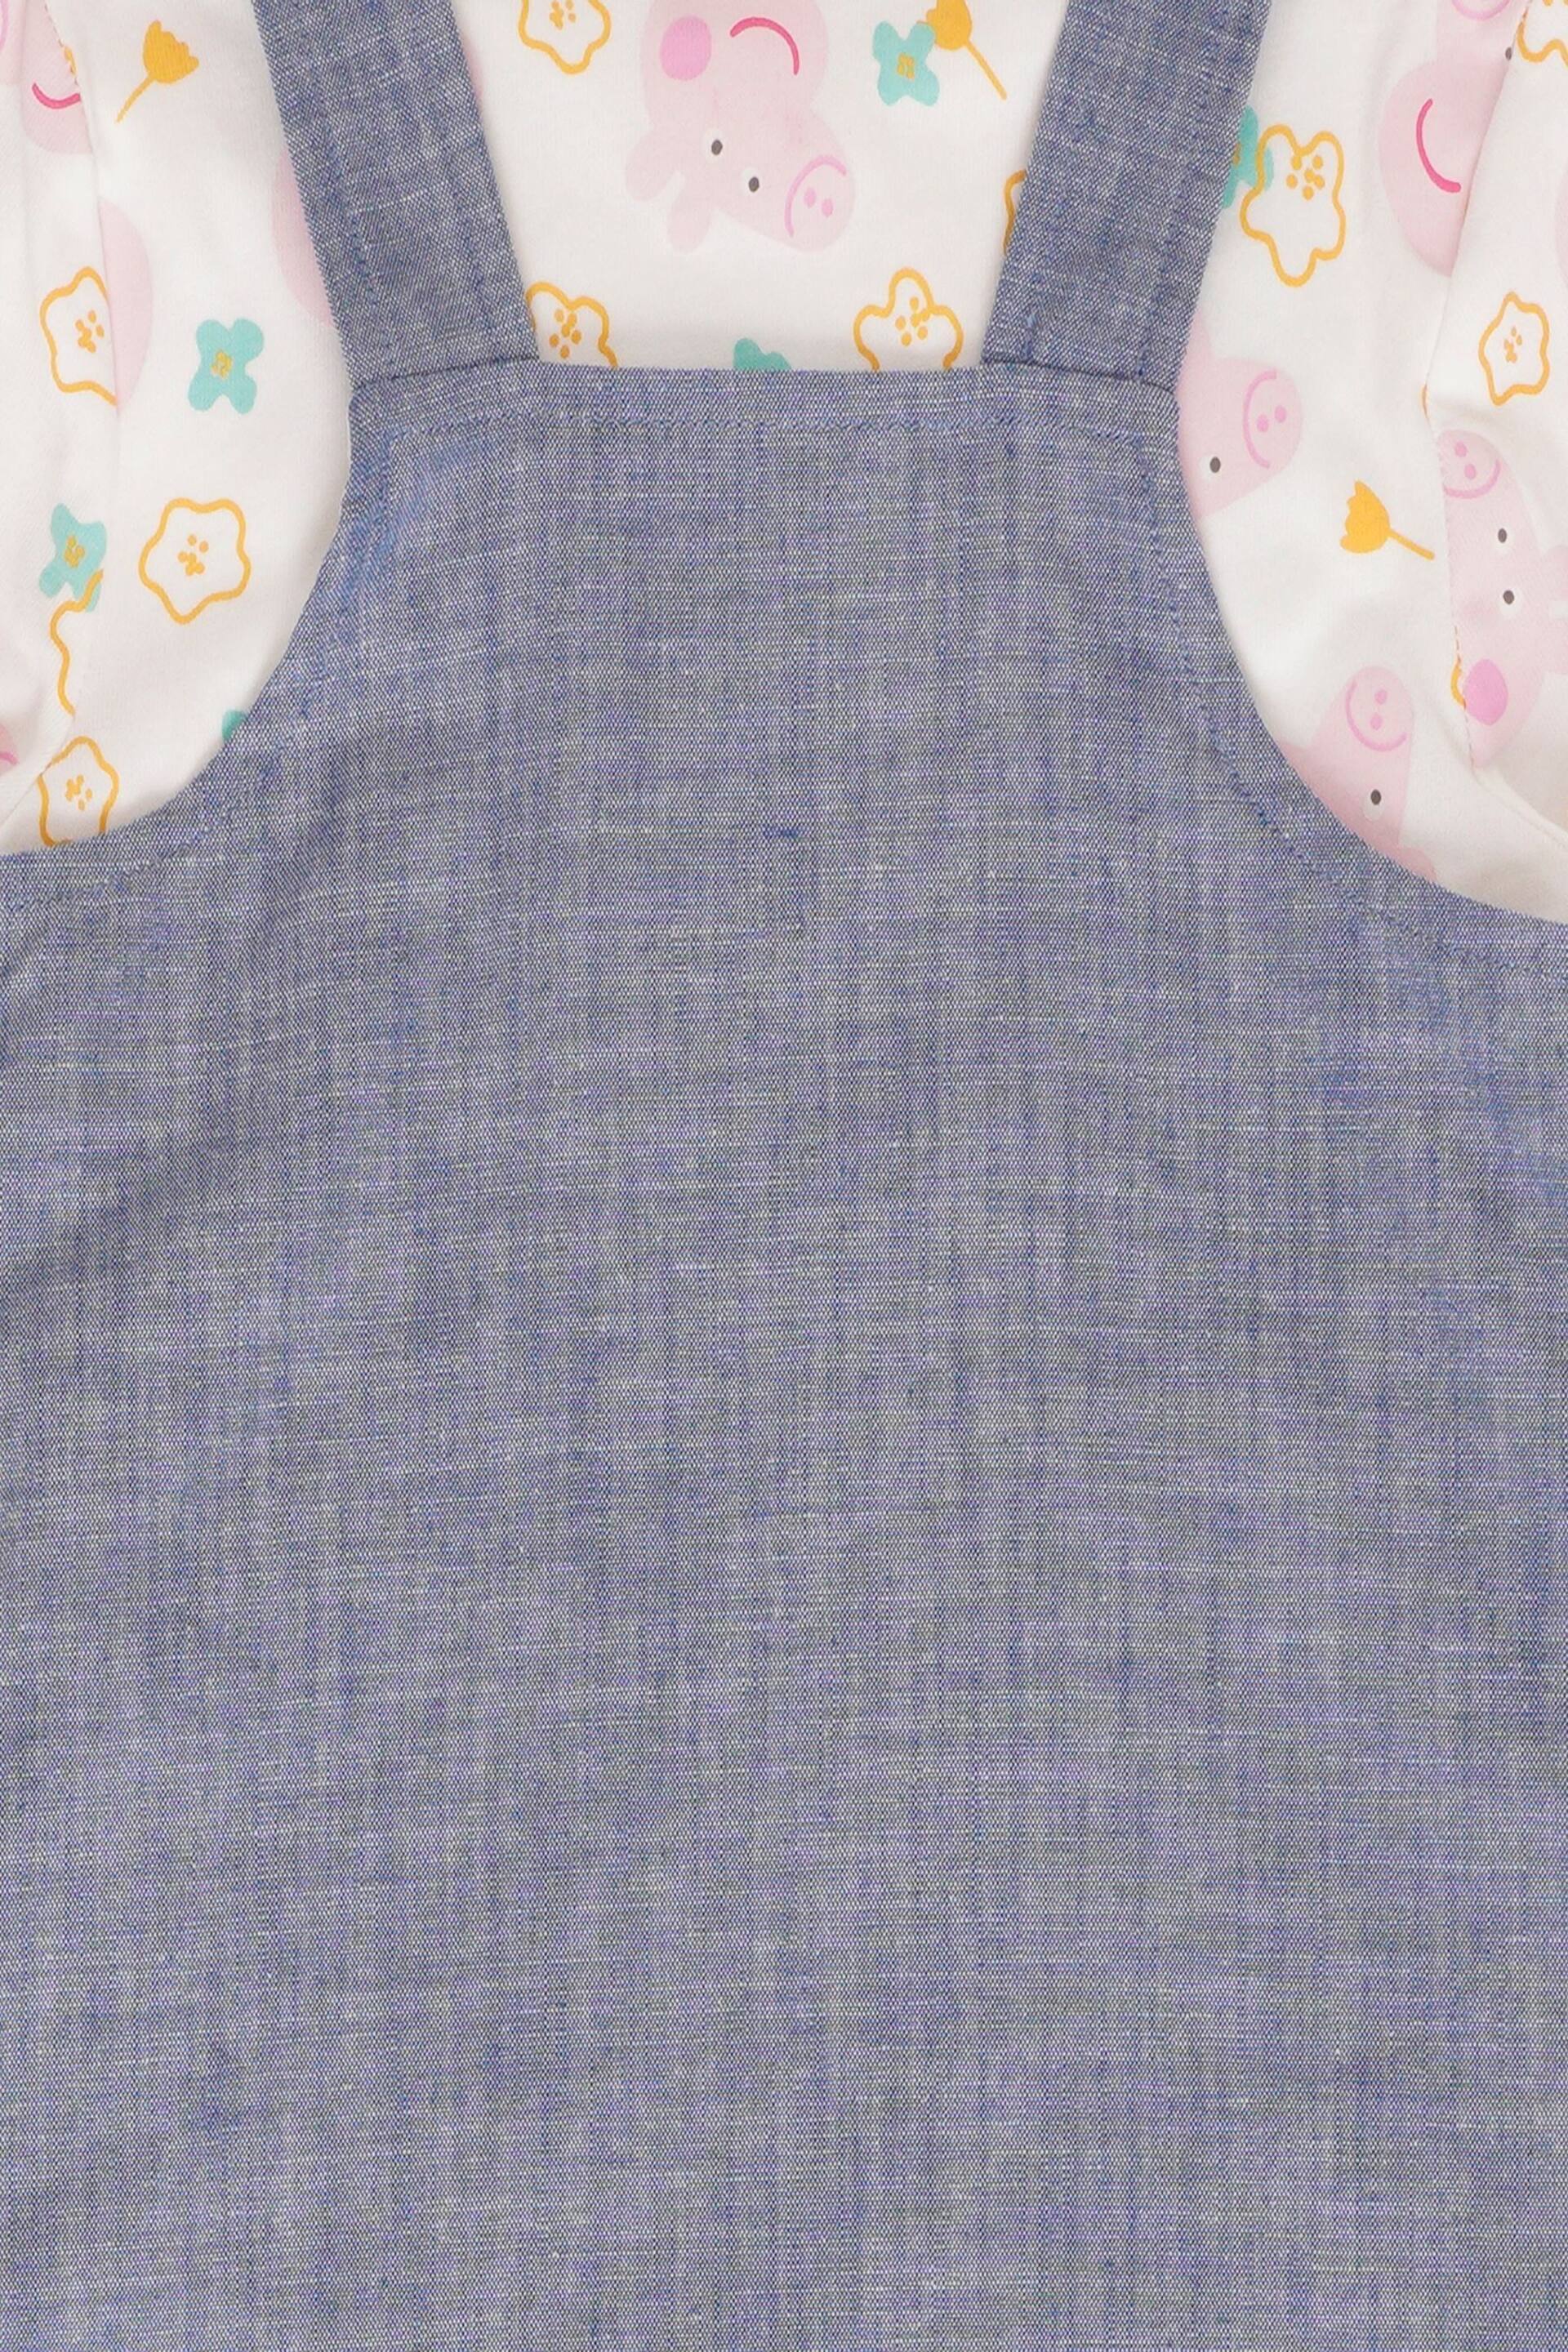 Brand Threads Pink Peppa Pig Cotton Pinafore Dress & T-Shirt - Image 3 of 4